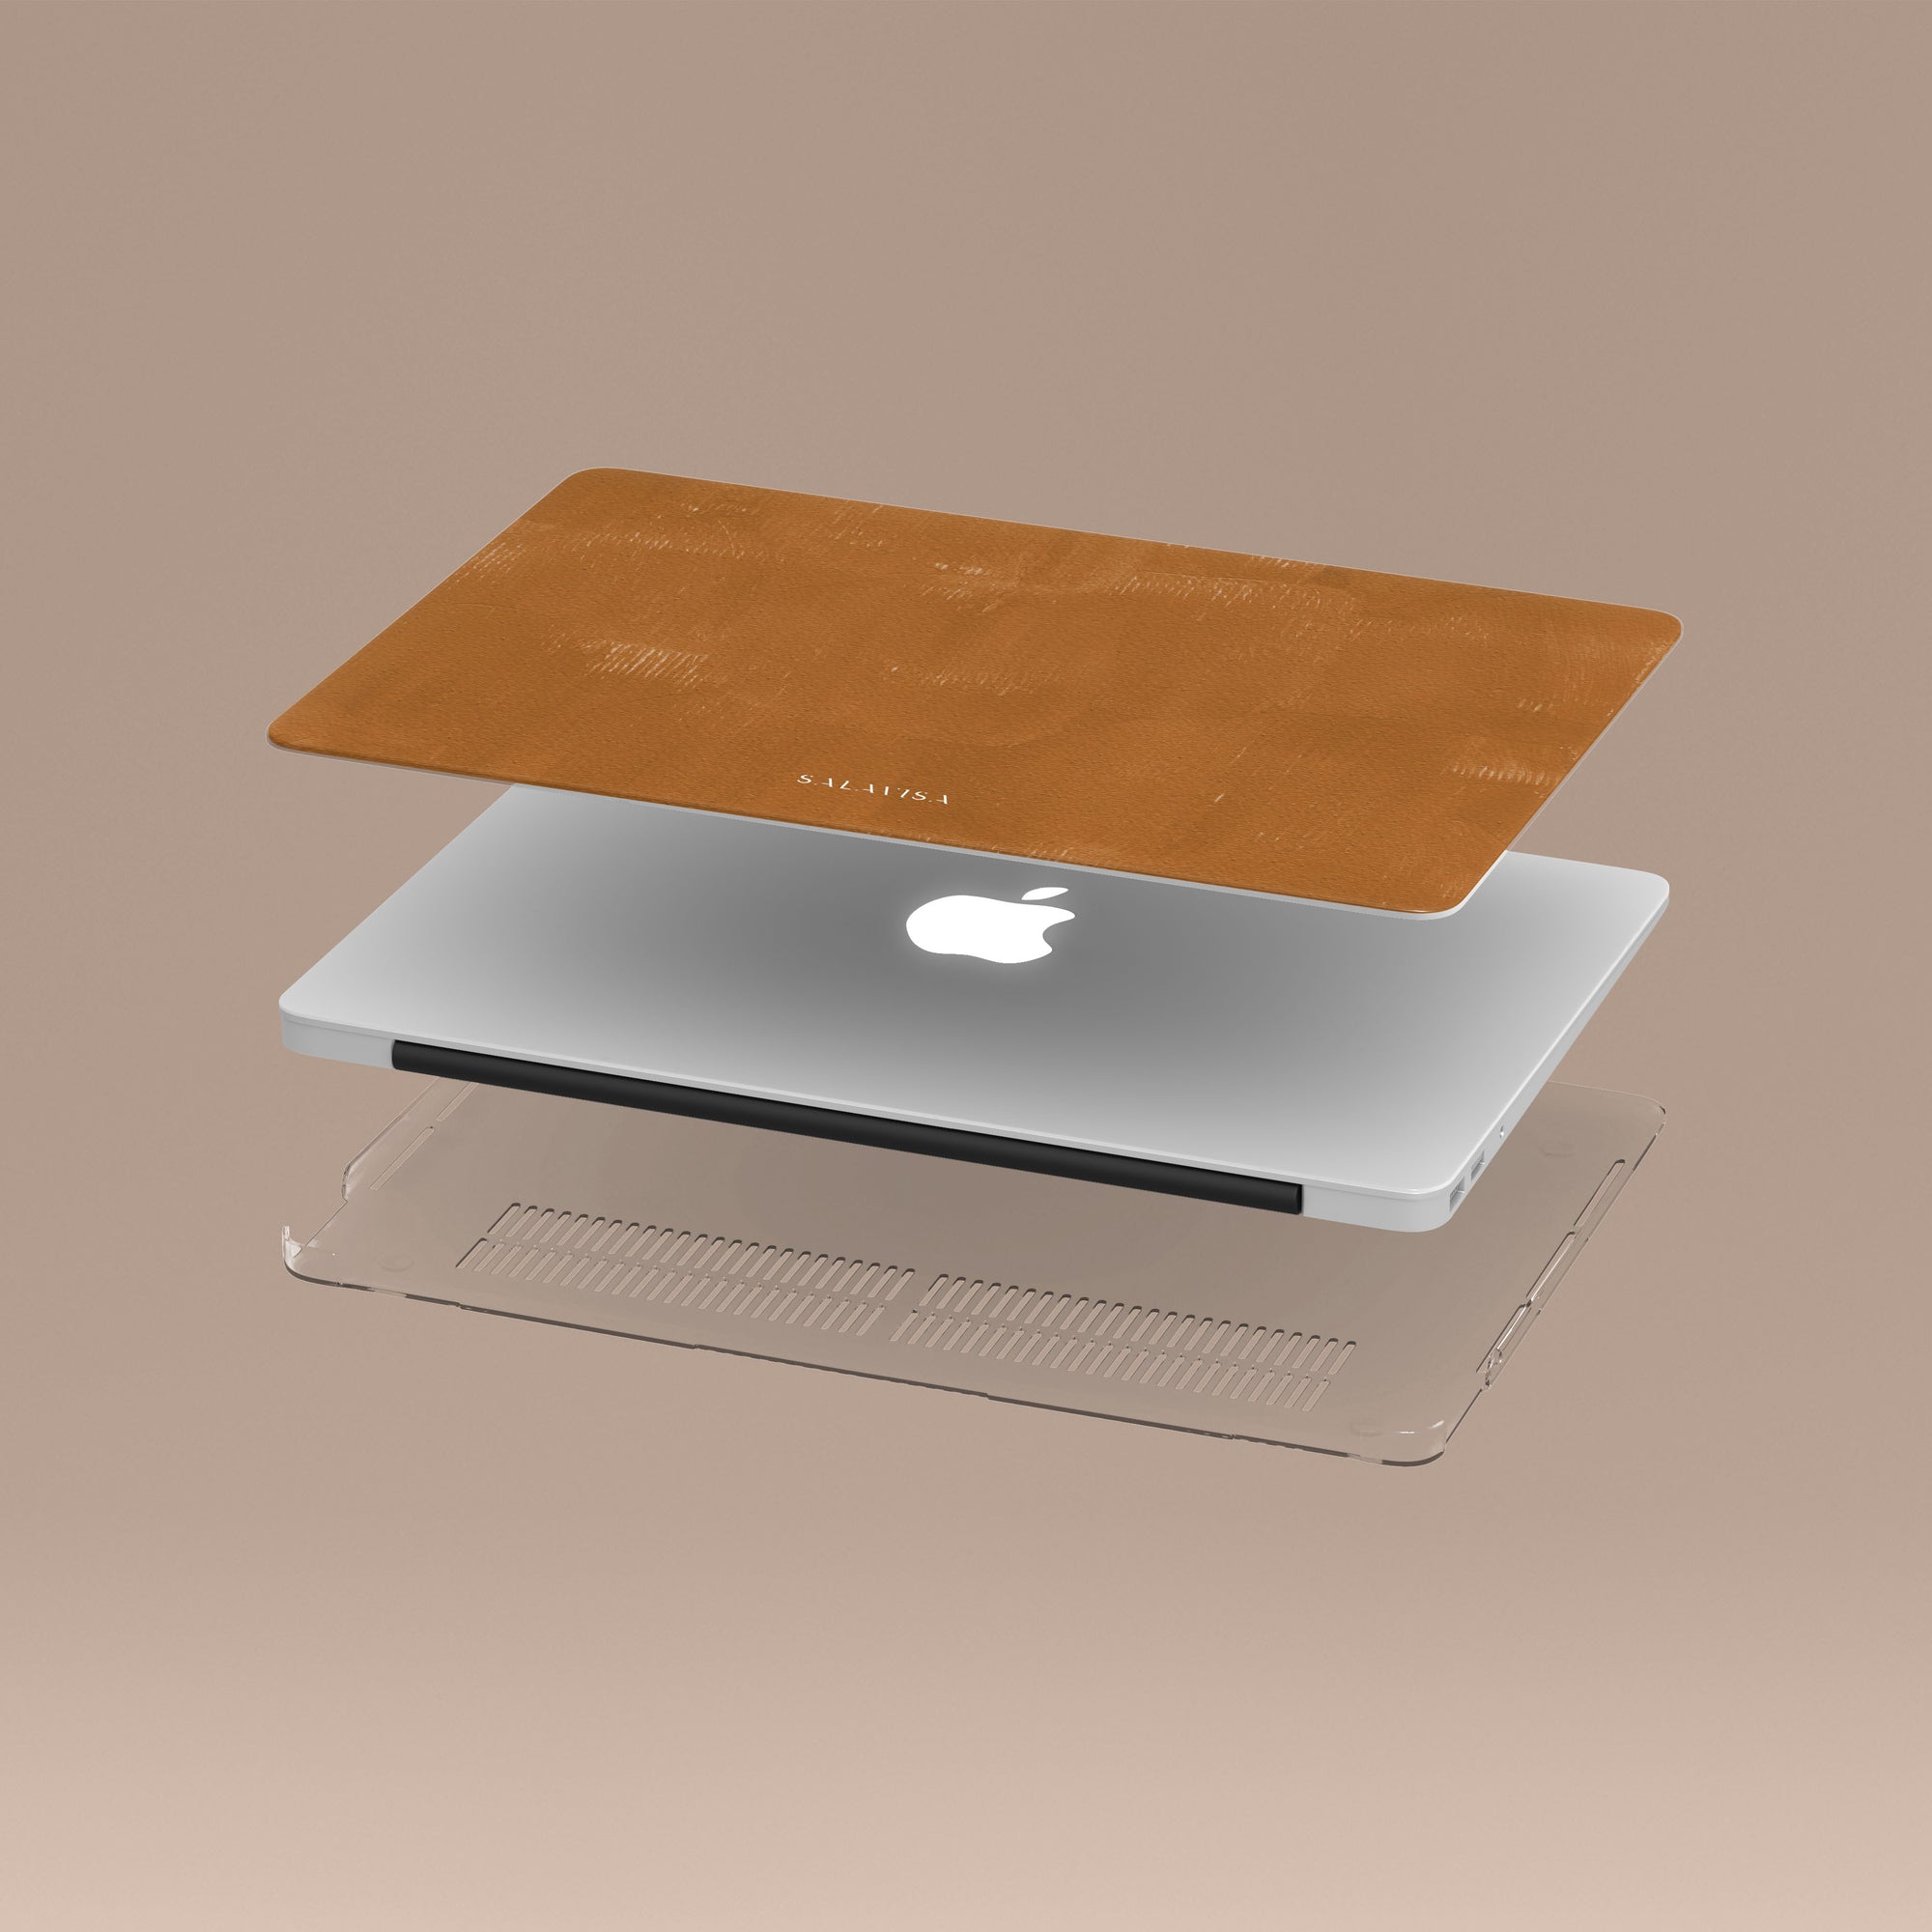 Brown Clay MacBook Case MacBook Cases - SALAVISA